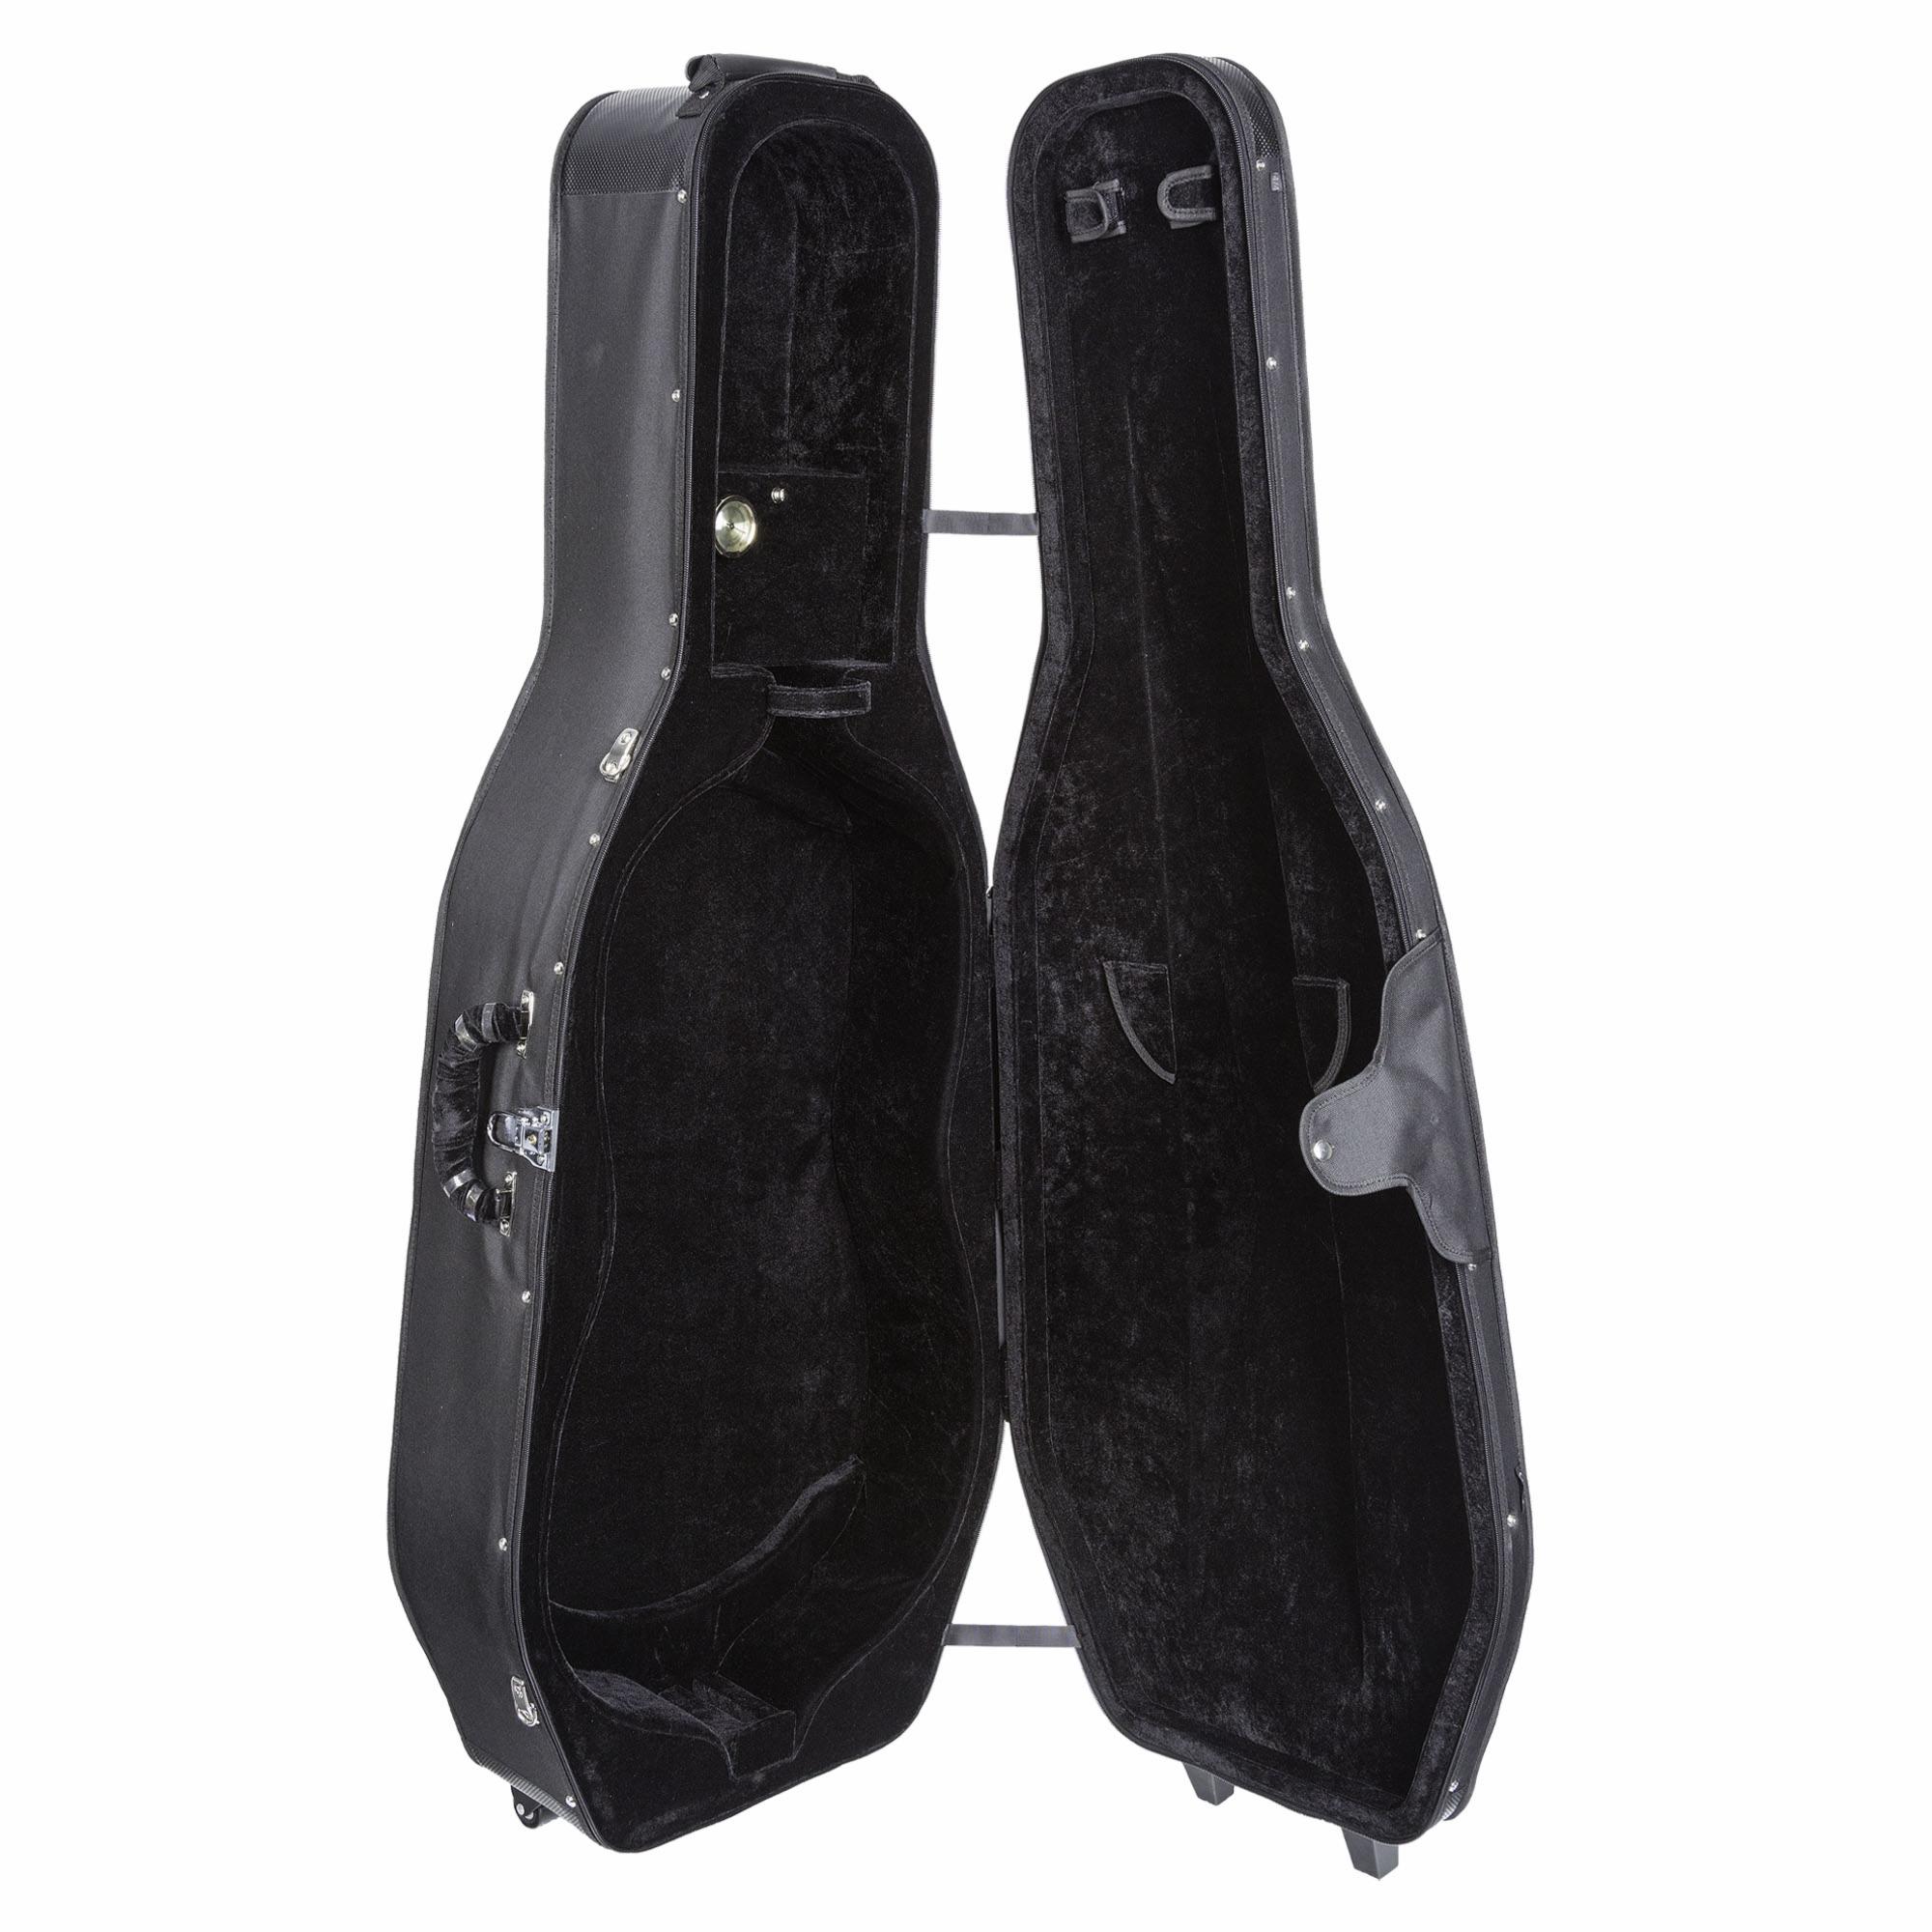 Oxford OX4200 Hardshell Cello Case